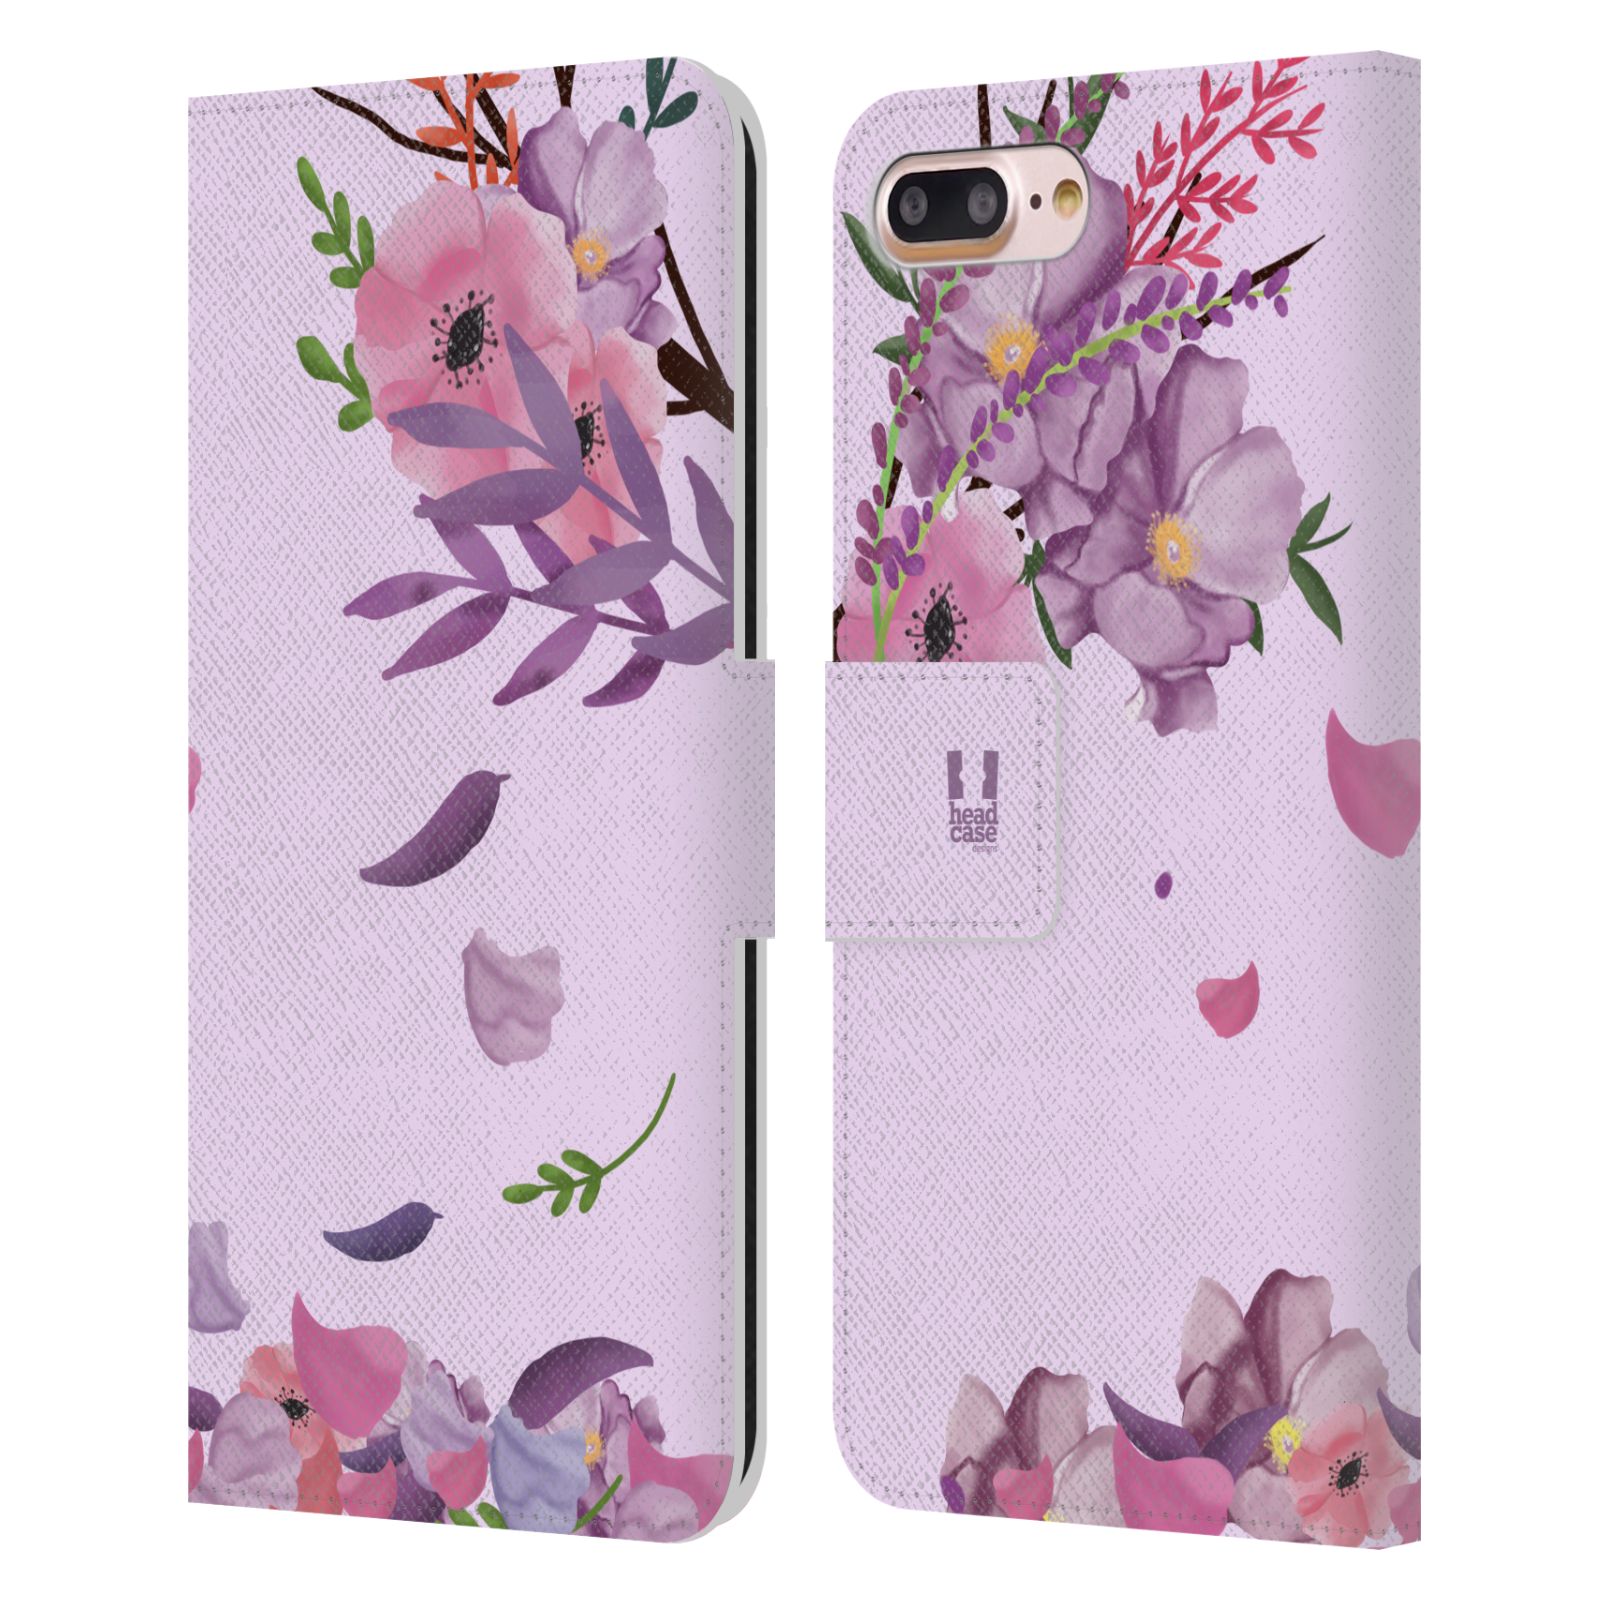 Pouzdro na mobil Apple Iphone 7+/8+ - HEAD CASE - Rozkvetlé růže a listy růžová